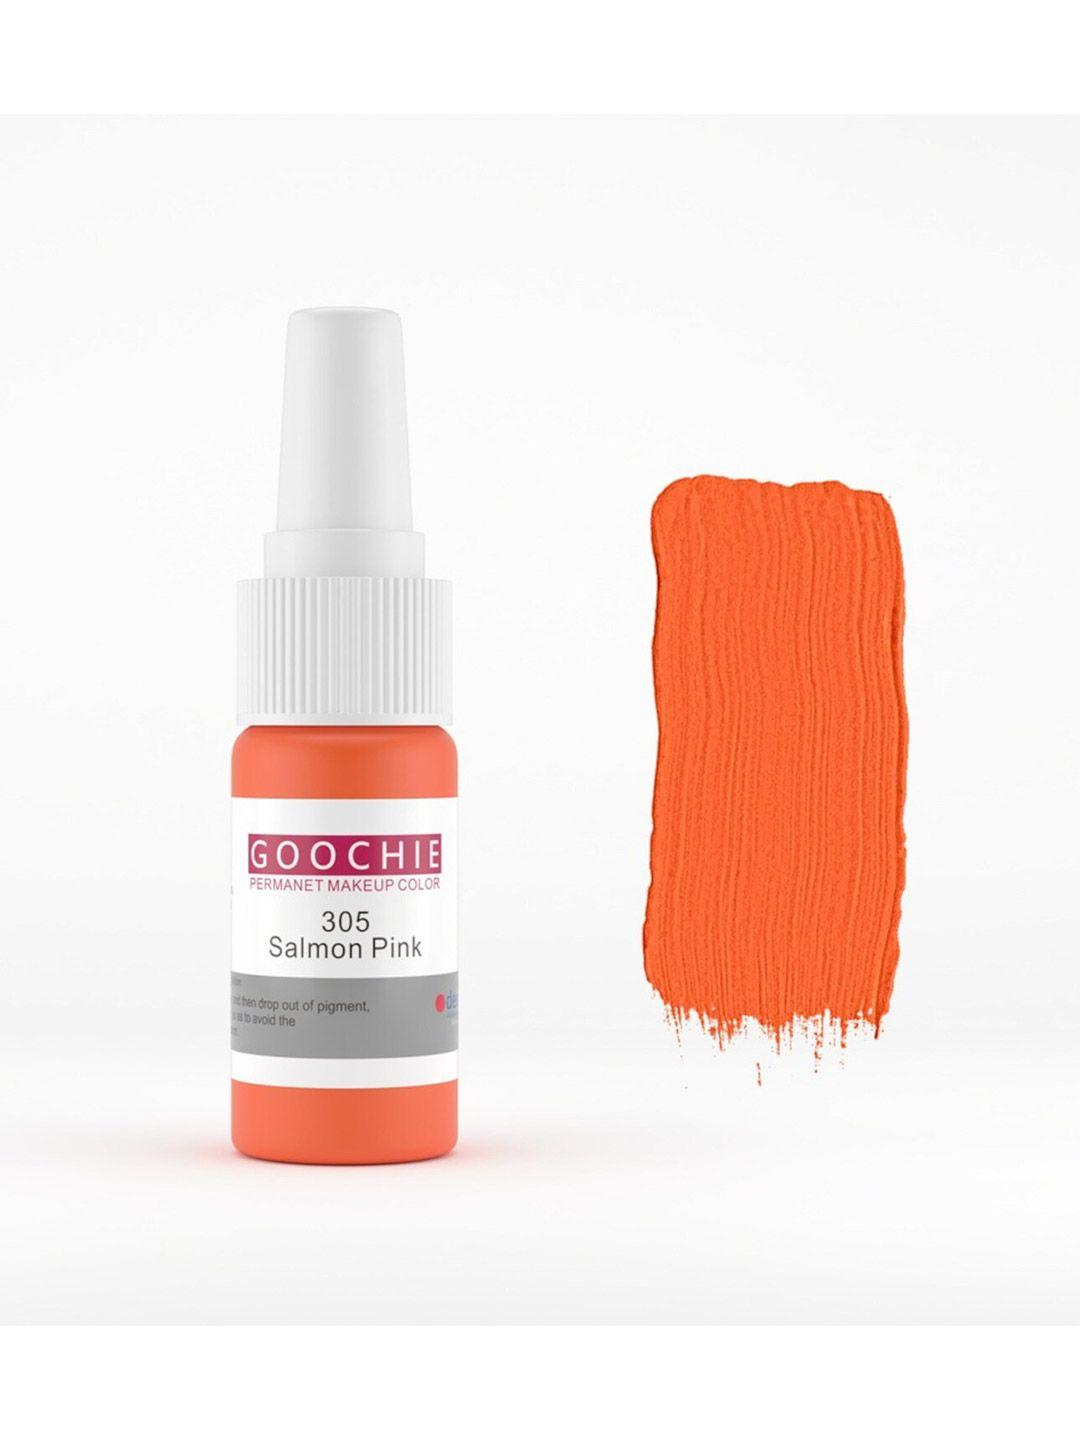 goochie permanent micro-pigment lip tint 15 ml - salmon pink 305